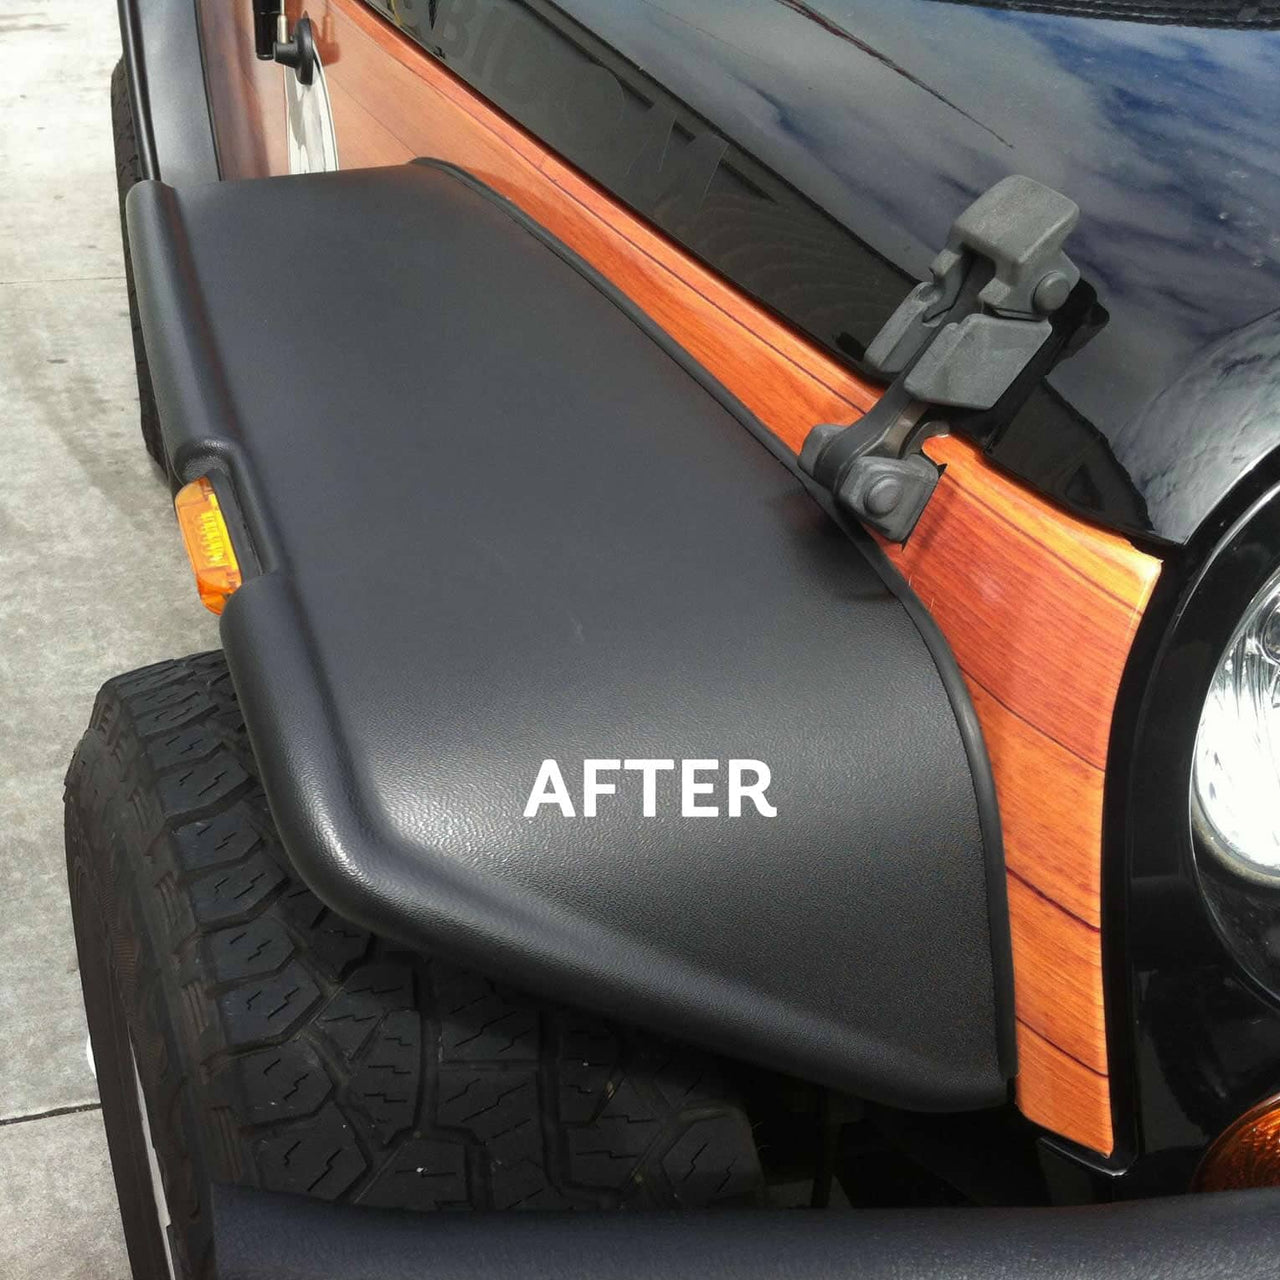  Jax Wax Black Trim Renew - Long-Lasting Car Trim Restorer and  Refurbisher - Restore Faded Plastic Trim for a Like-New Condition - 8oz  Bottle : Automotive